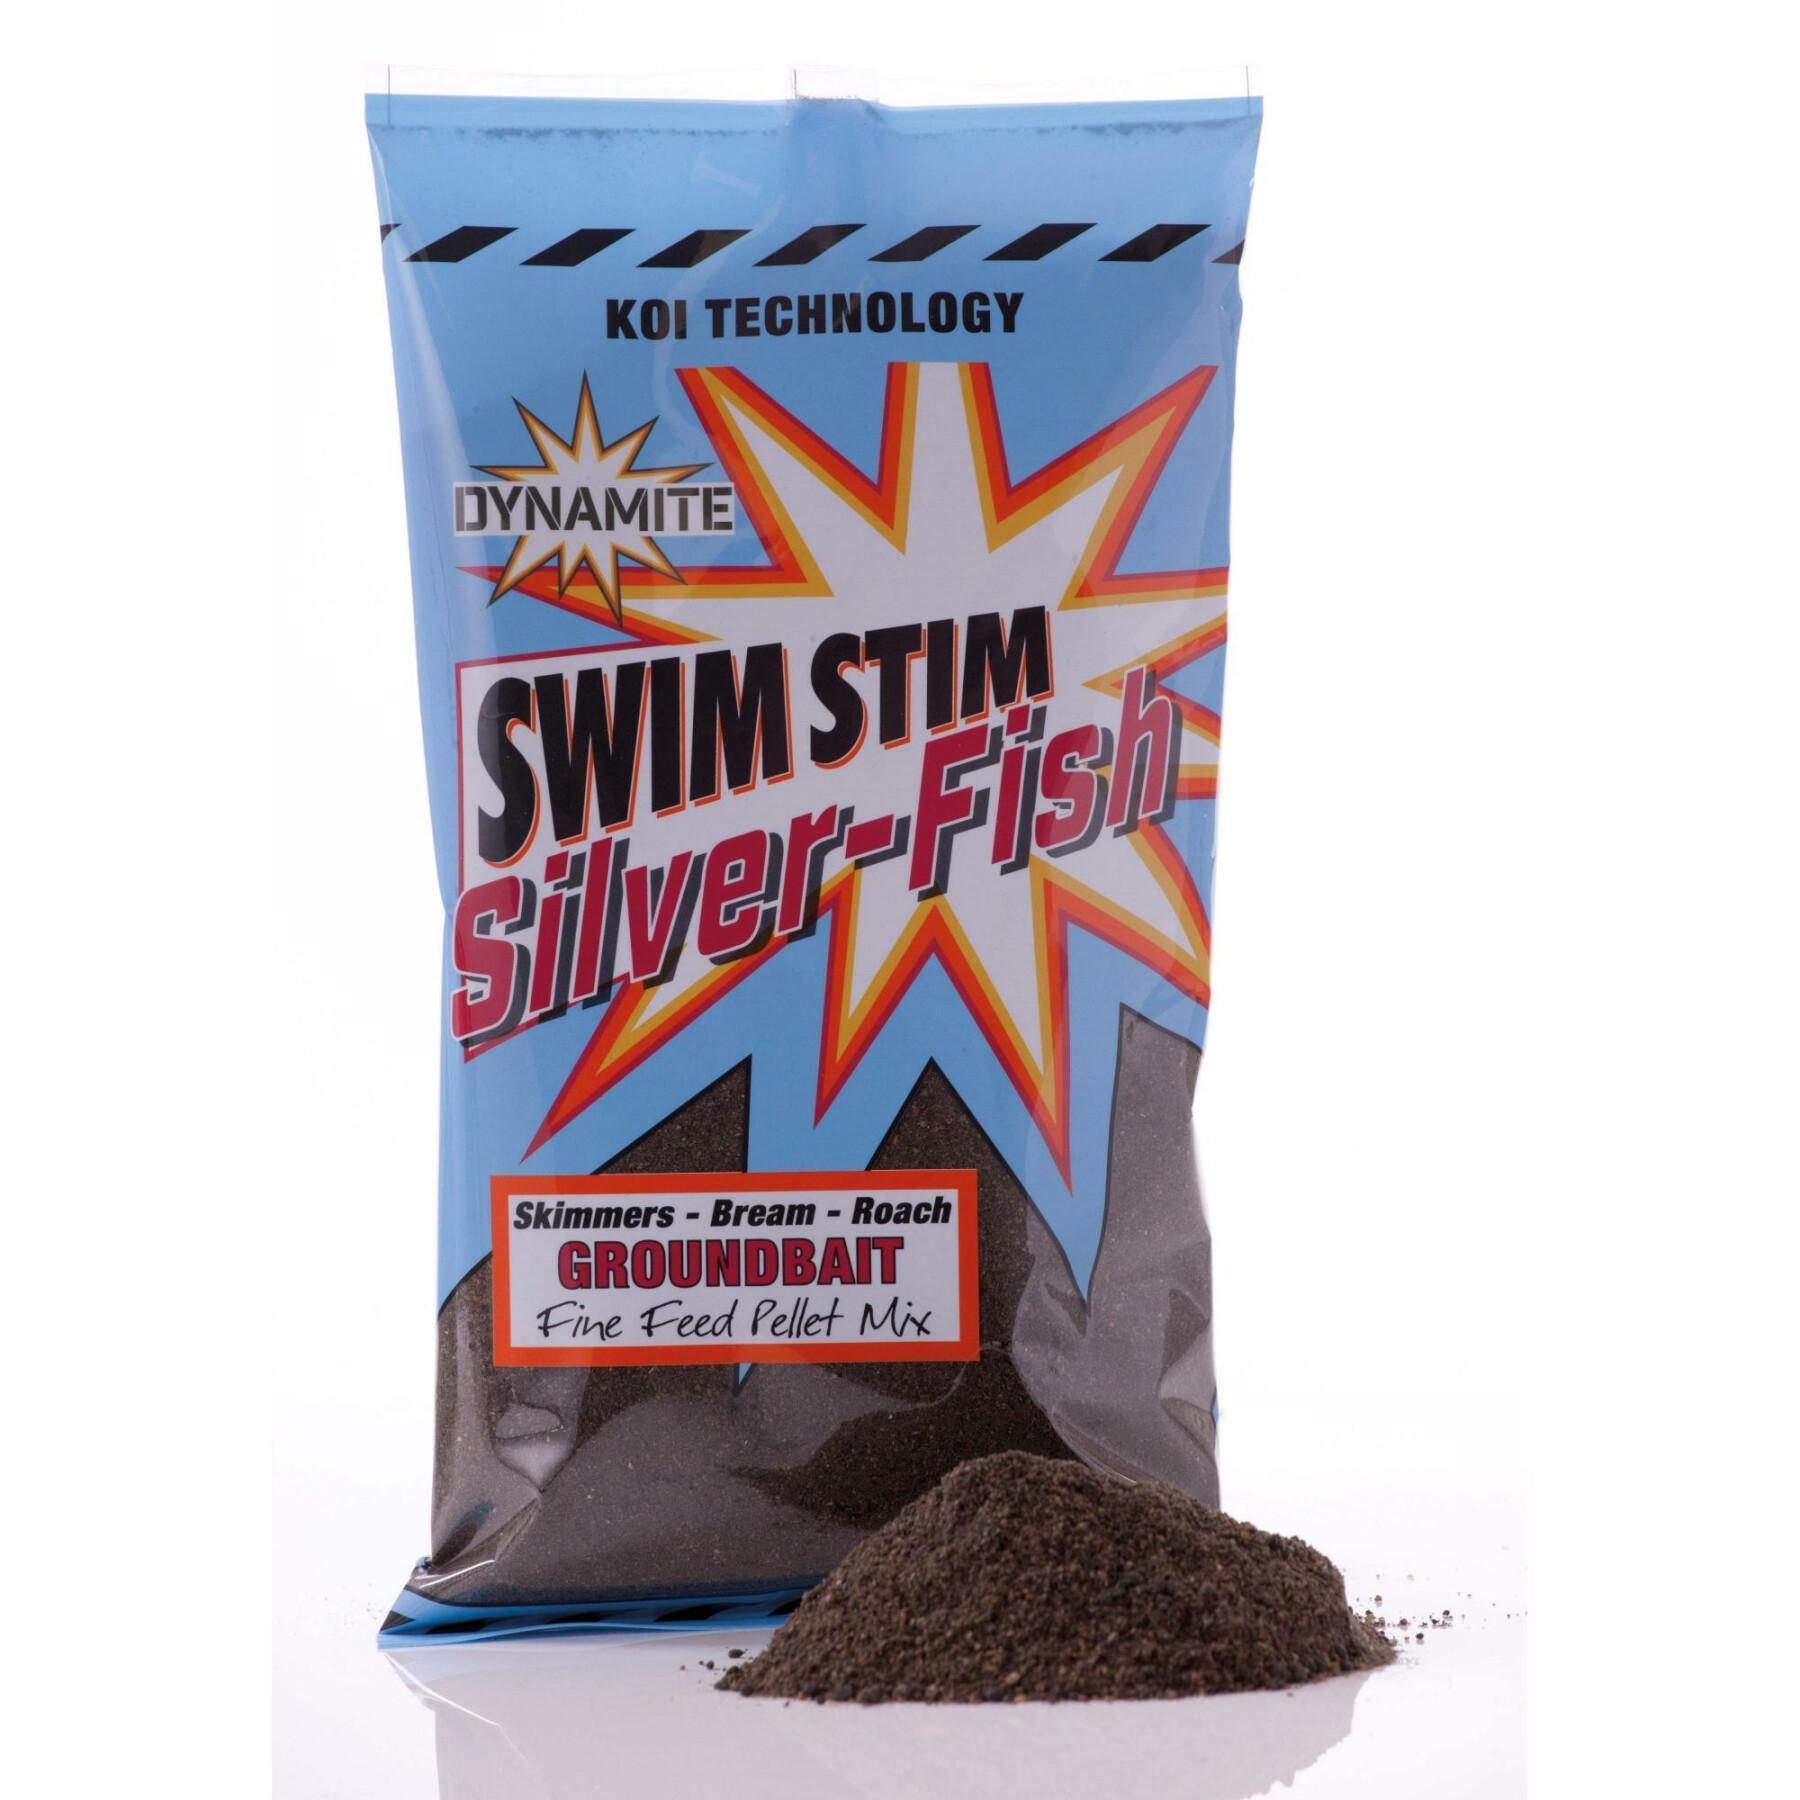 Primer Dynamite Baits Swim stim silverfish groundbait 900g - Baits - Carp -  Fishing